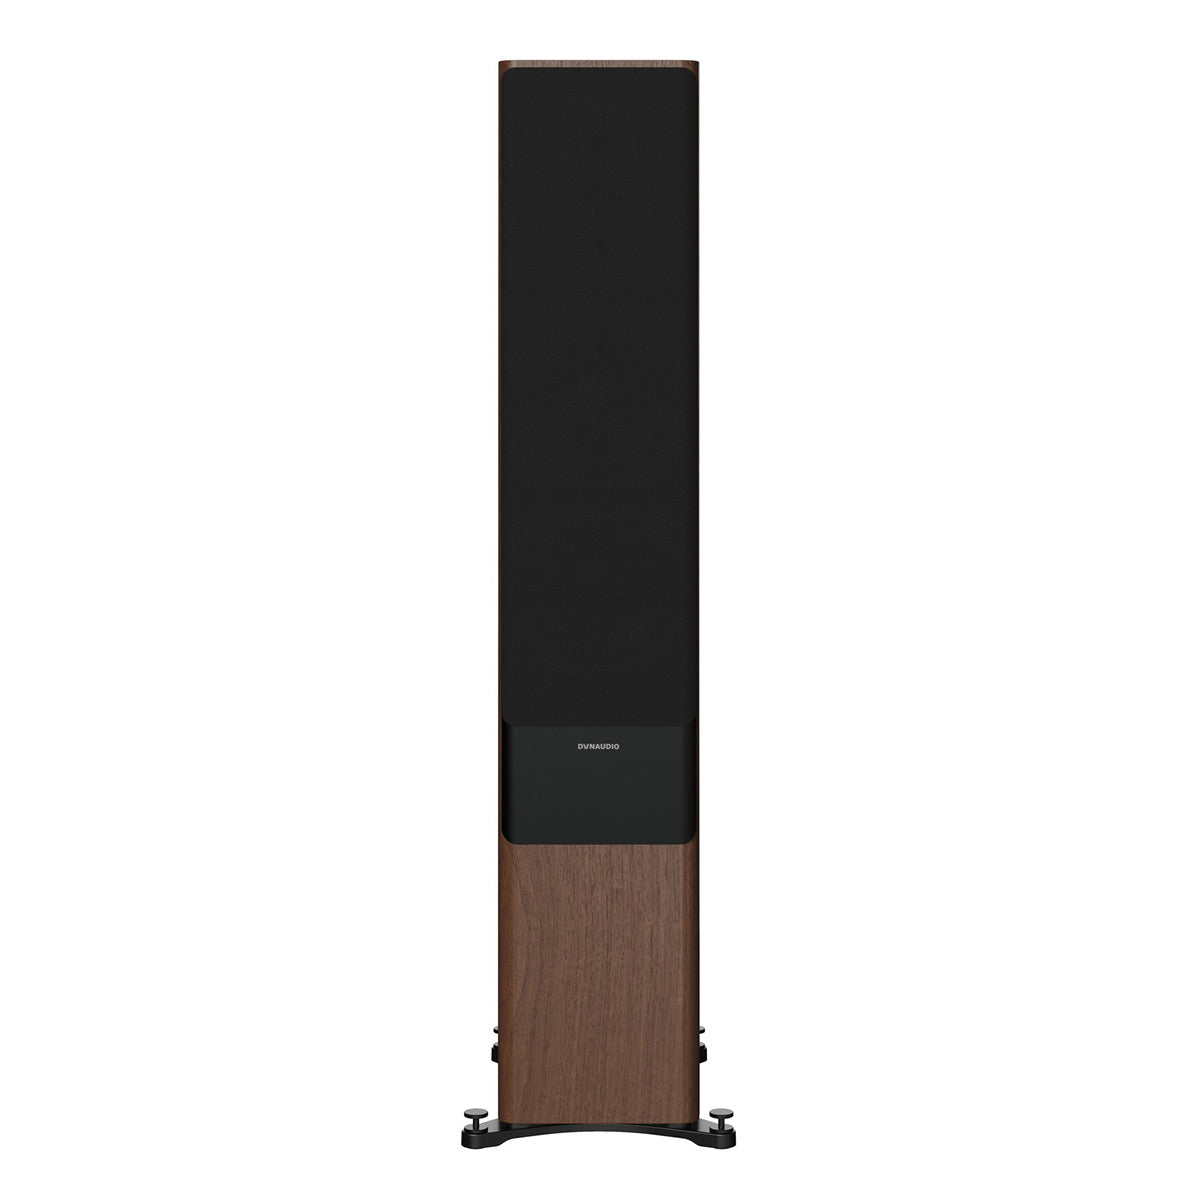 Dynaudio Contour 60i Floorstanding Speaker - Each (Walnut)